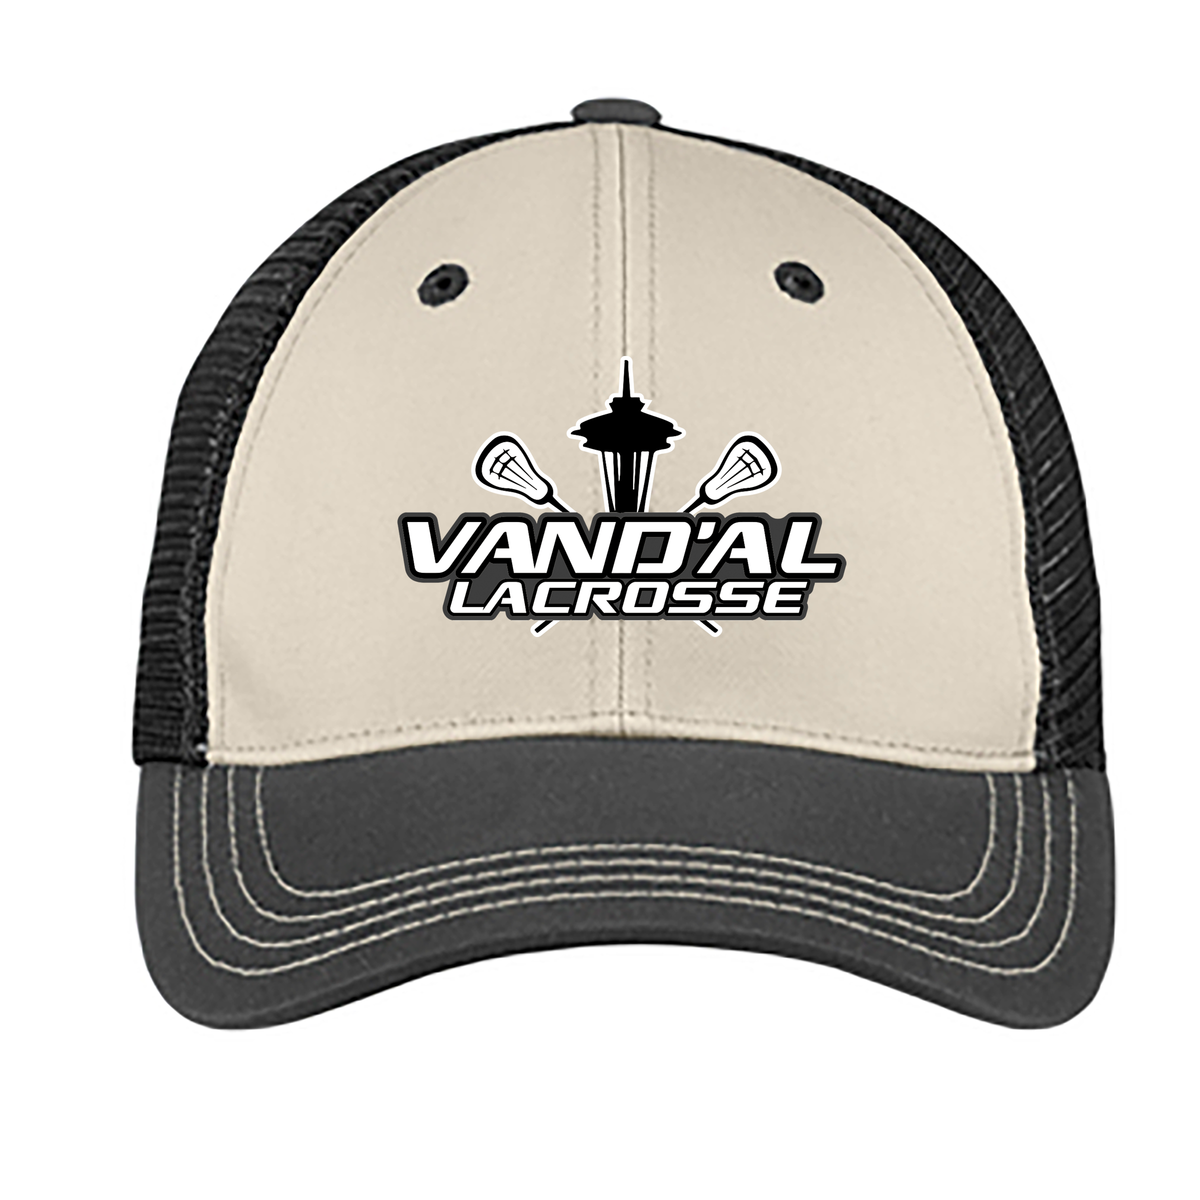 Vand'al Lacrosse Tri-Tone Mesh Back Cap